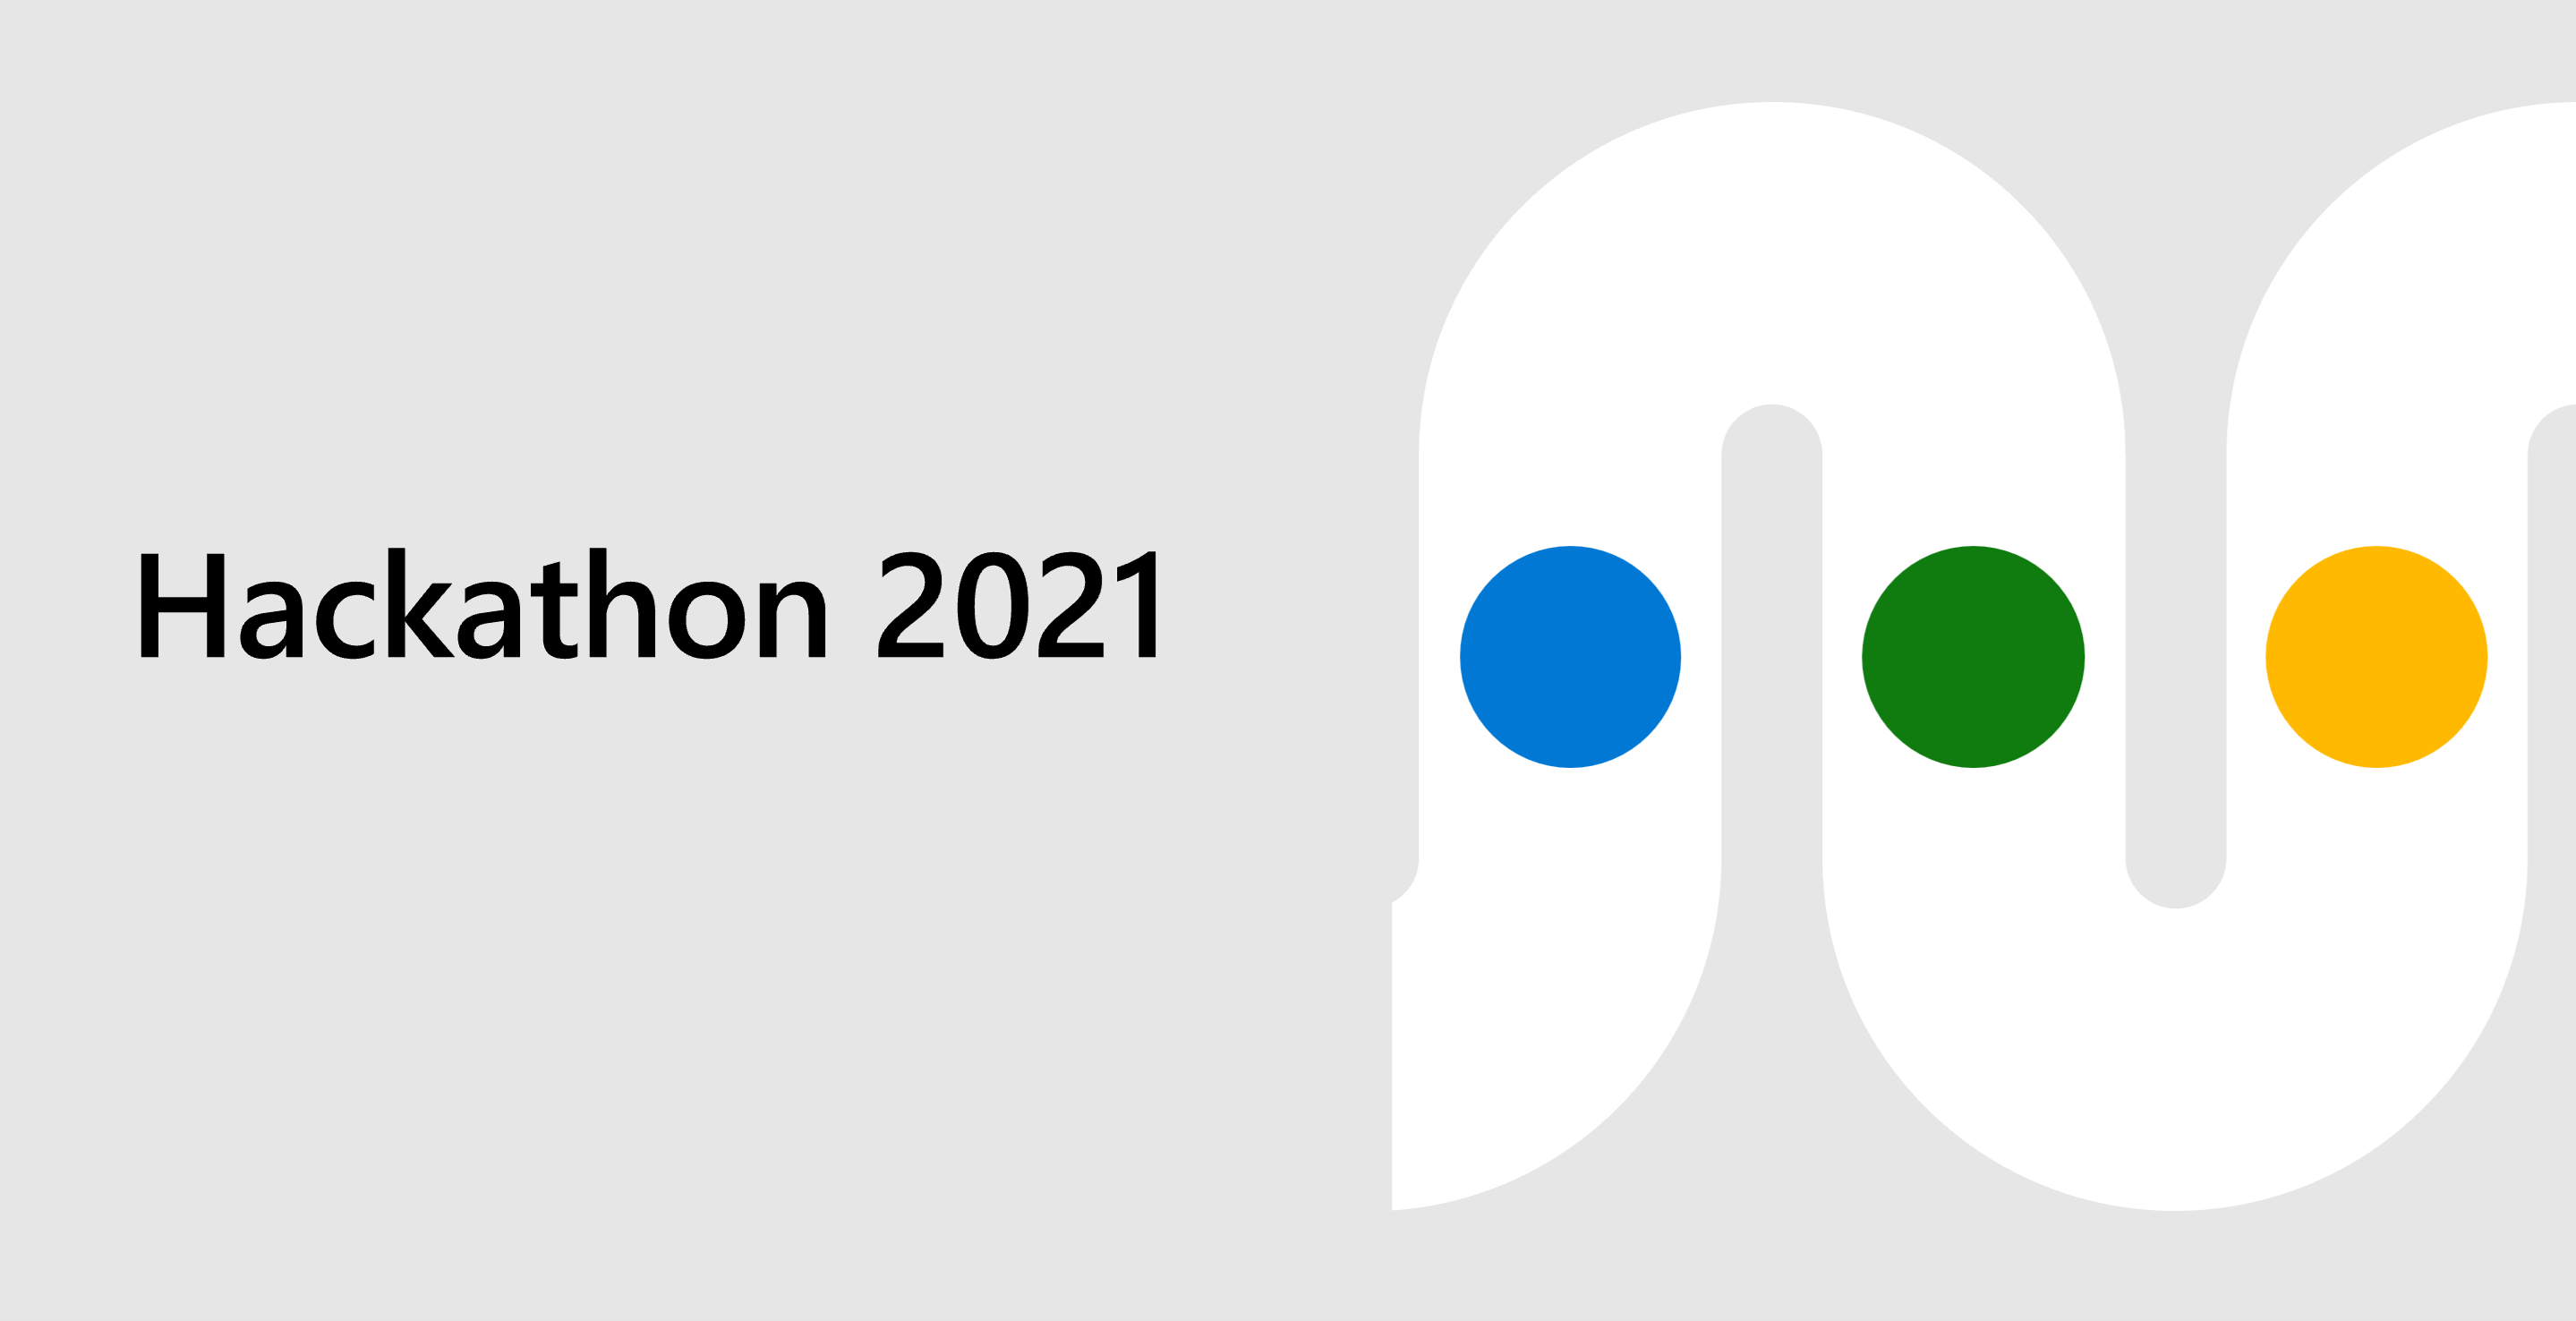 Wiki Afcon Hackathon 2021 - Meta